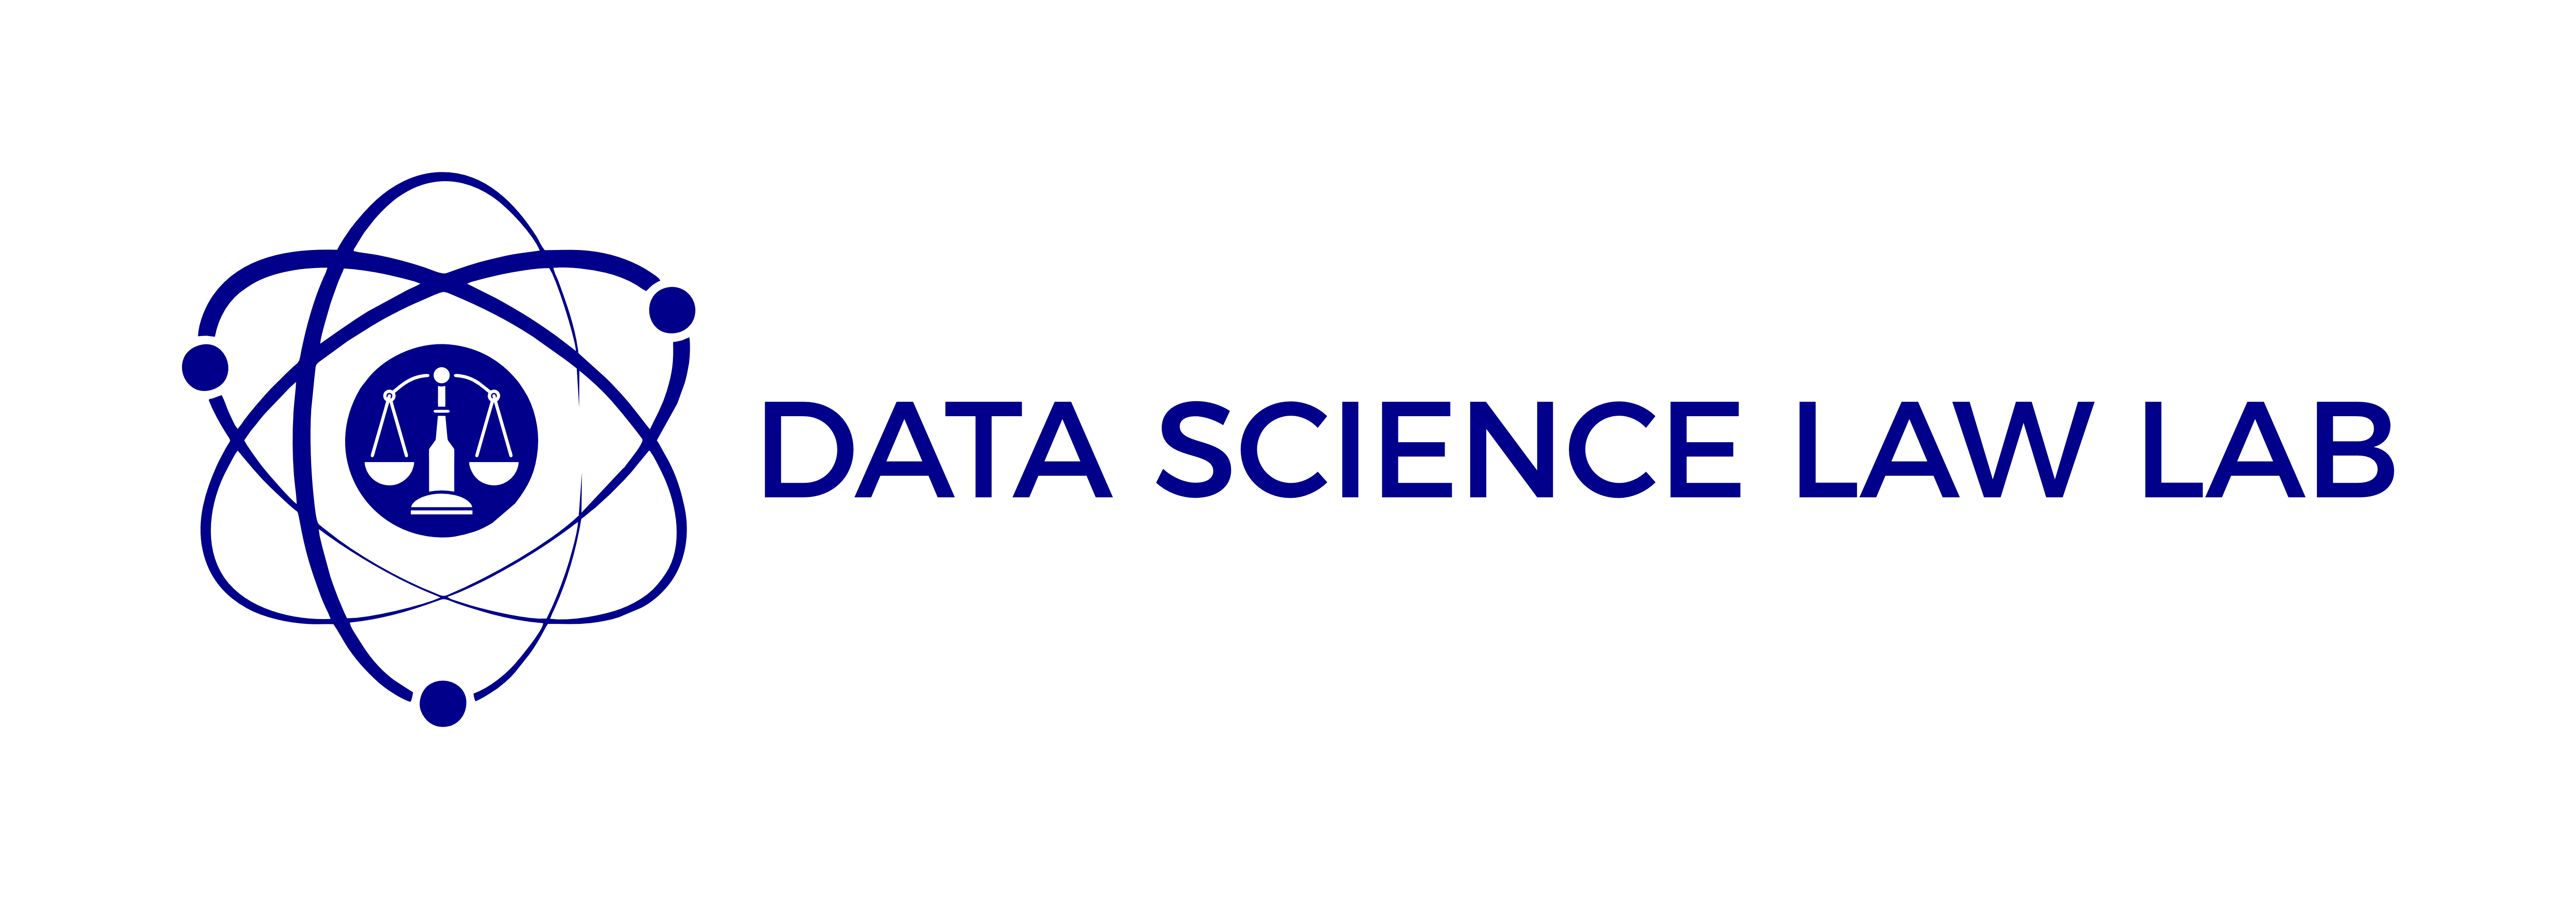 Data Science Law Lab